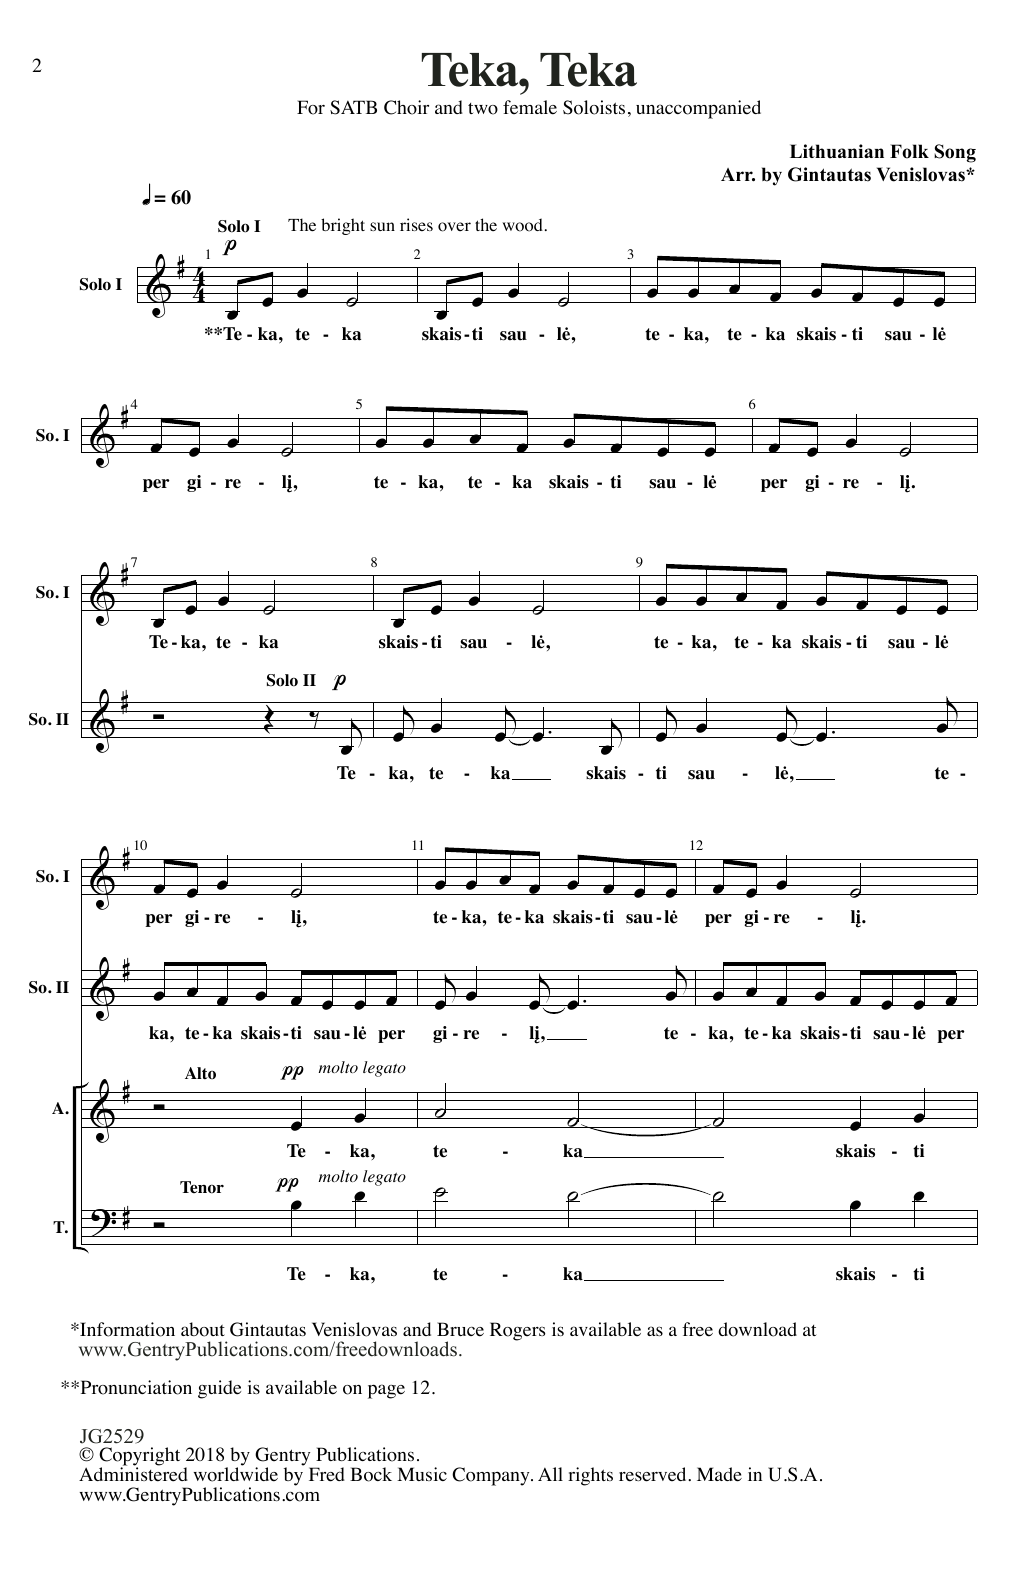 Lithuanian Folk Song Teka, Teka (arr. Gintautas Venislovas) sheet music notes and chords arranged for SATB Choir